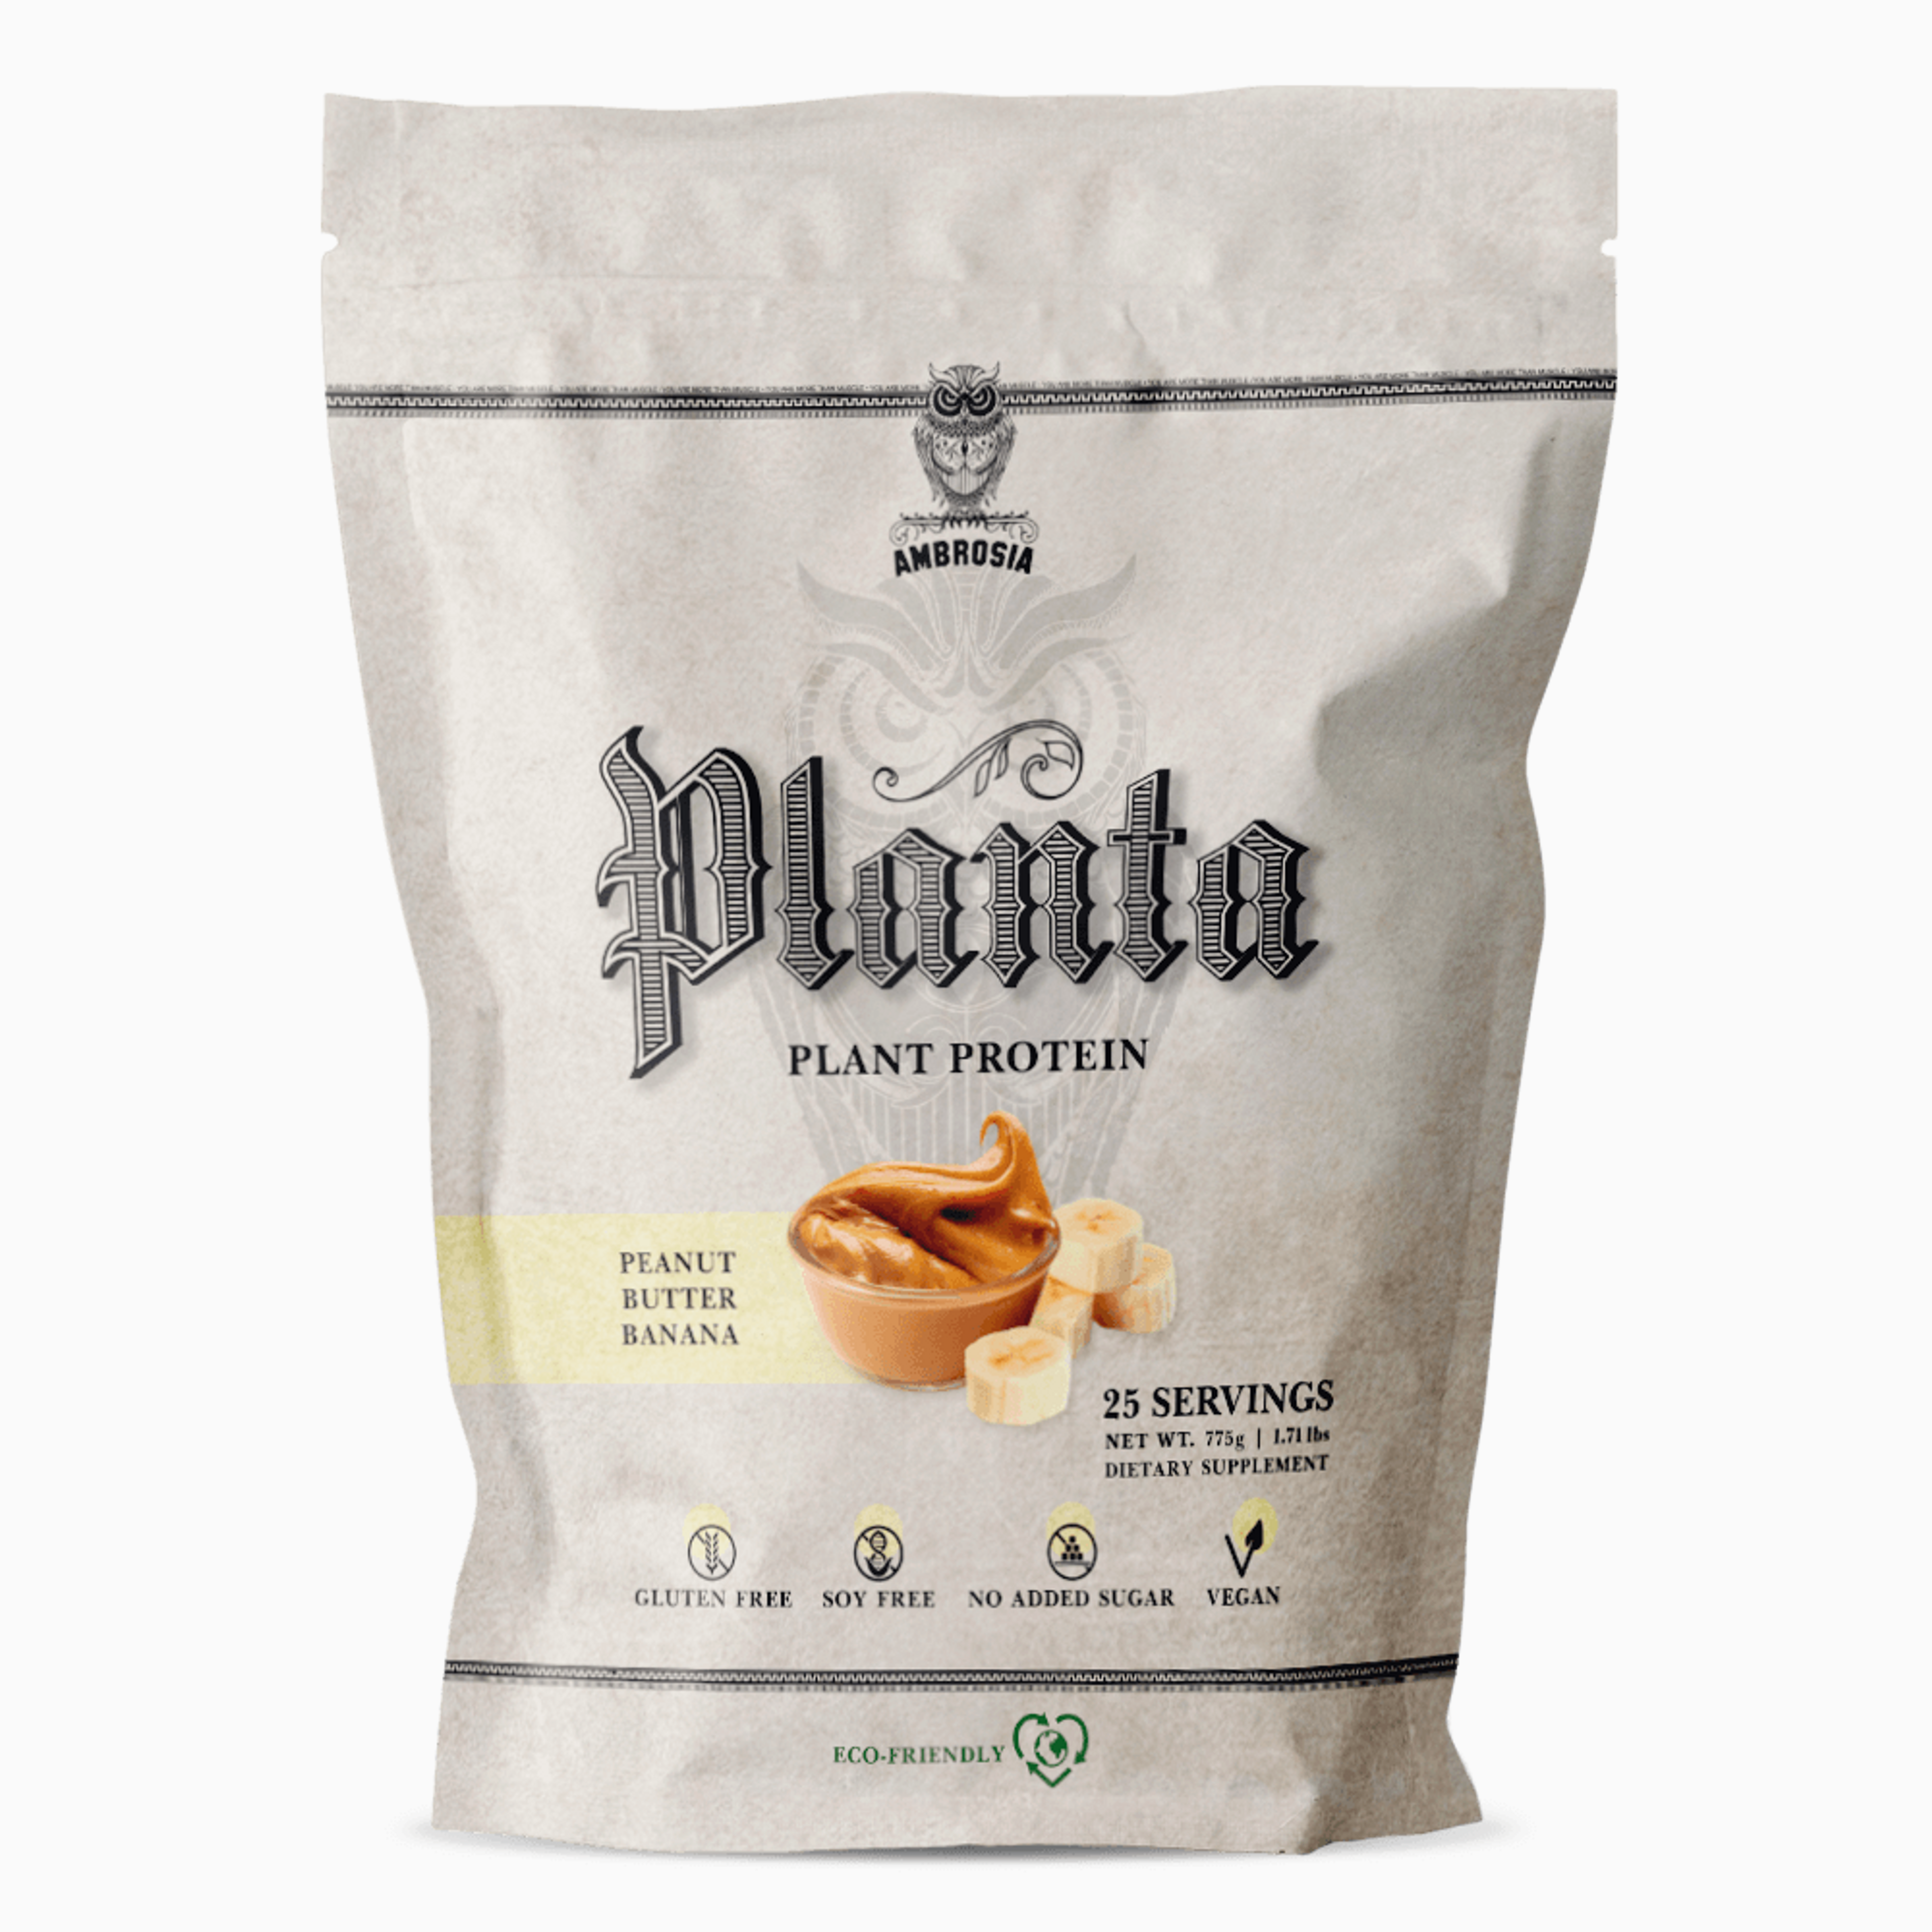 Peanut Butter Banana Ambrosia Planta - Premium Plant Protein